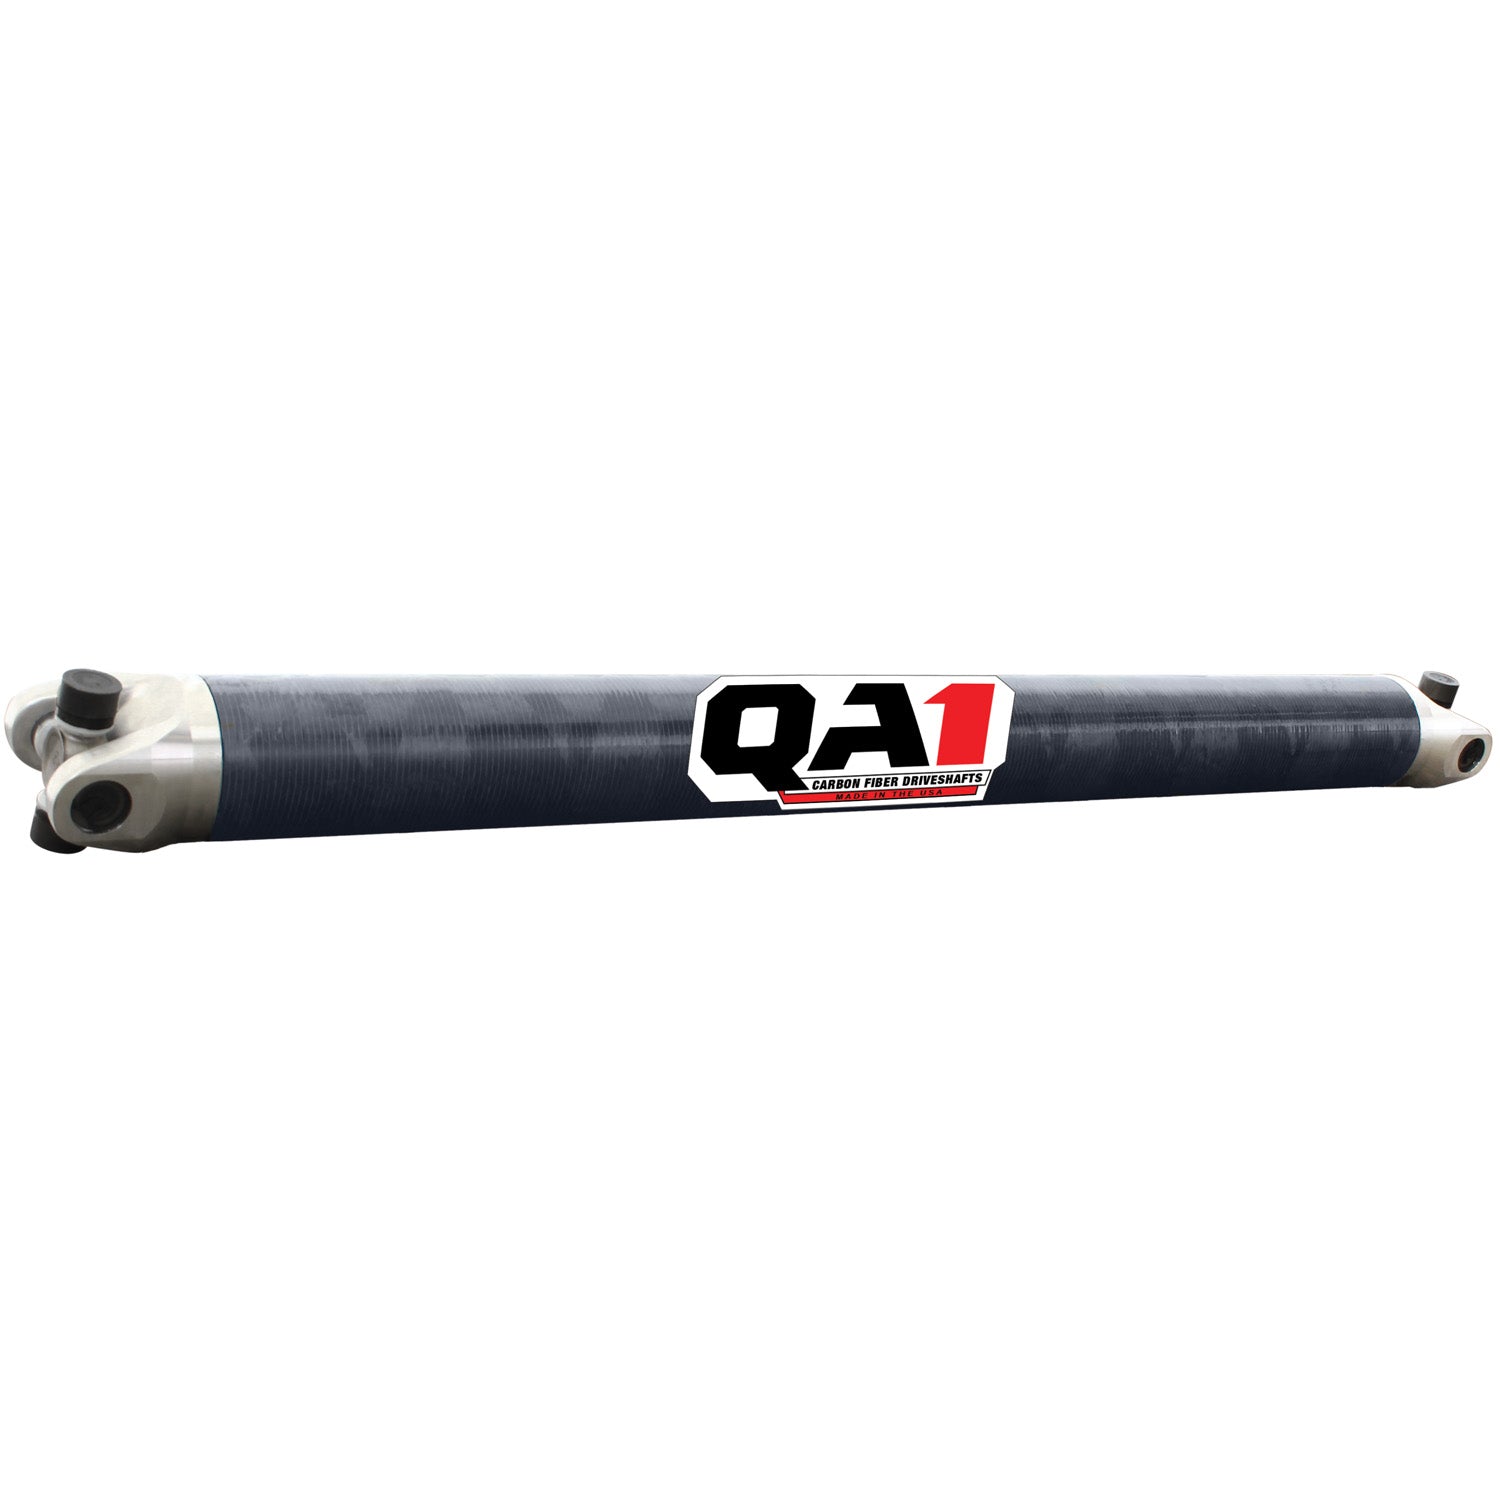 QA1 JJ-11242 Driveshaft, Cf, Ct-Dirt LM, 34.50 XM 3.2, 1310 U-Joint, 2600Lb.